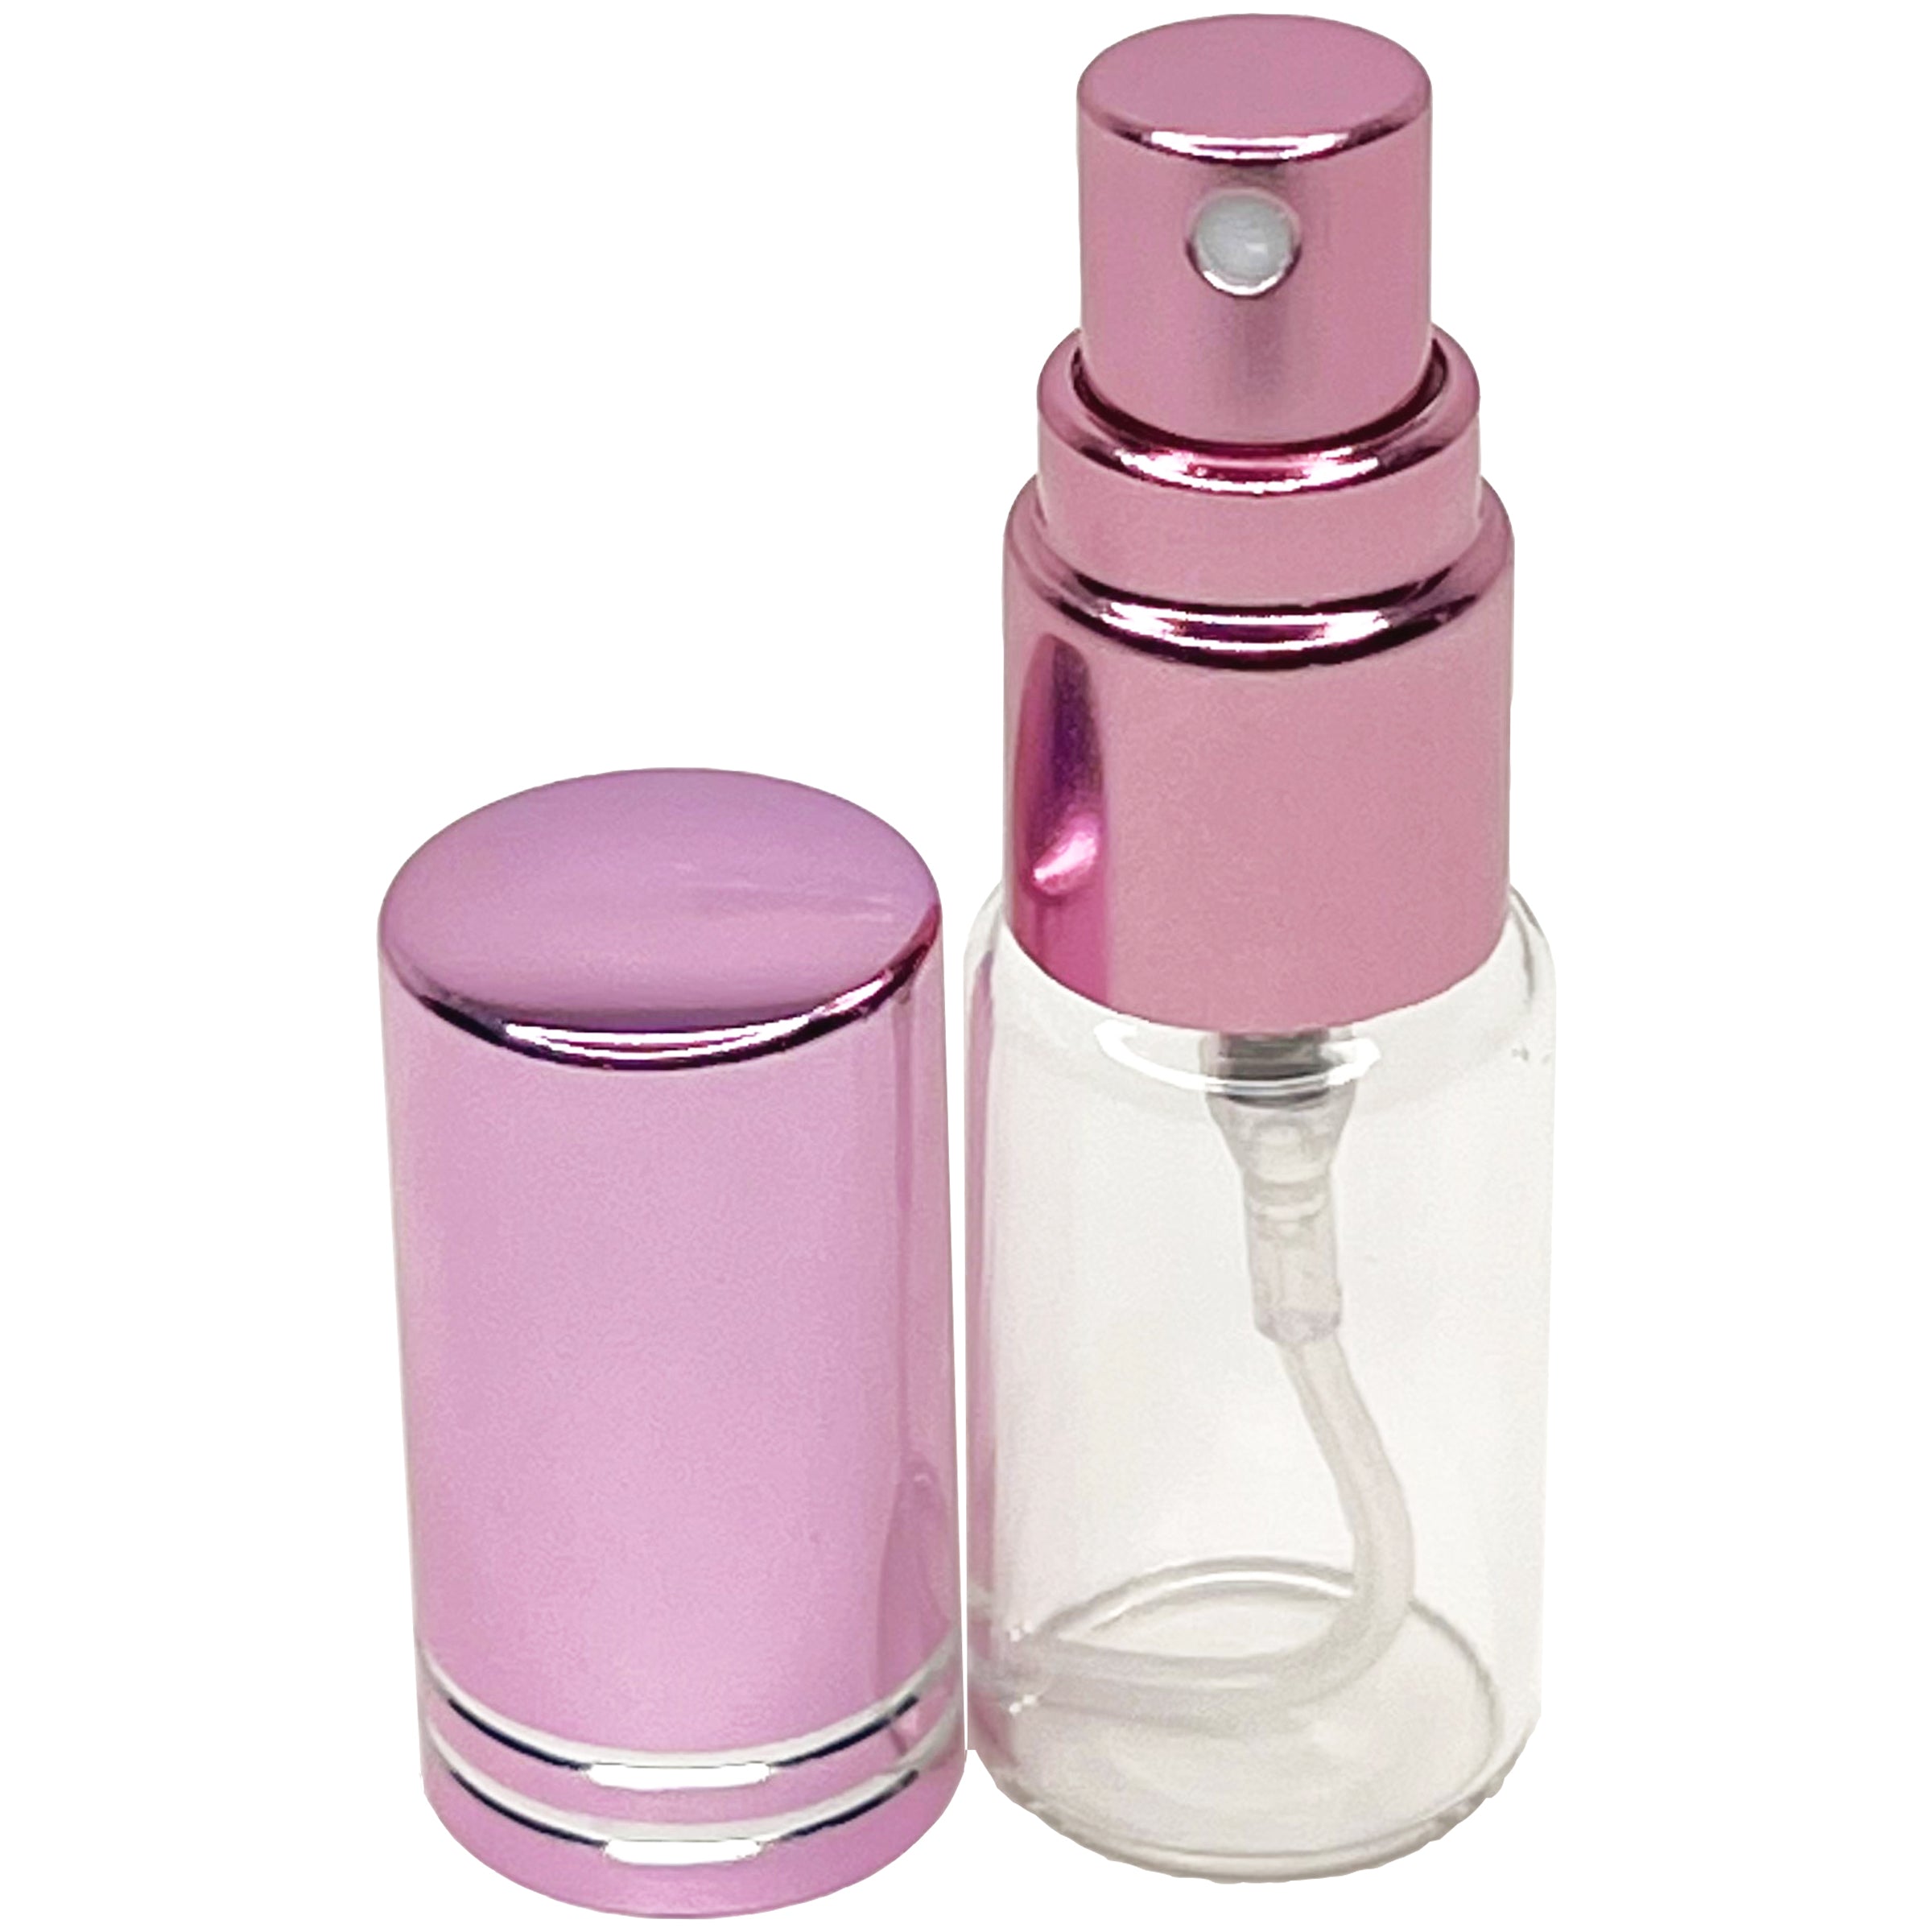 5ml 0.17oz Perfume Glass Spray Bottles Pink Line Cap